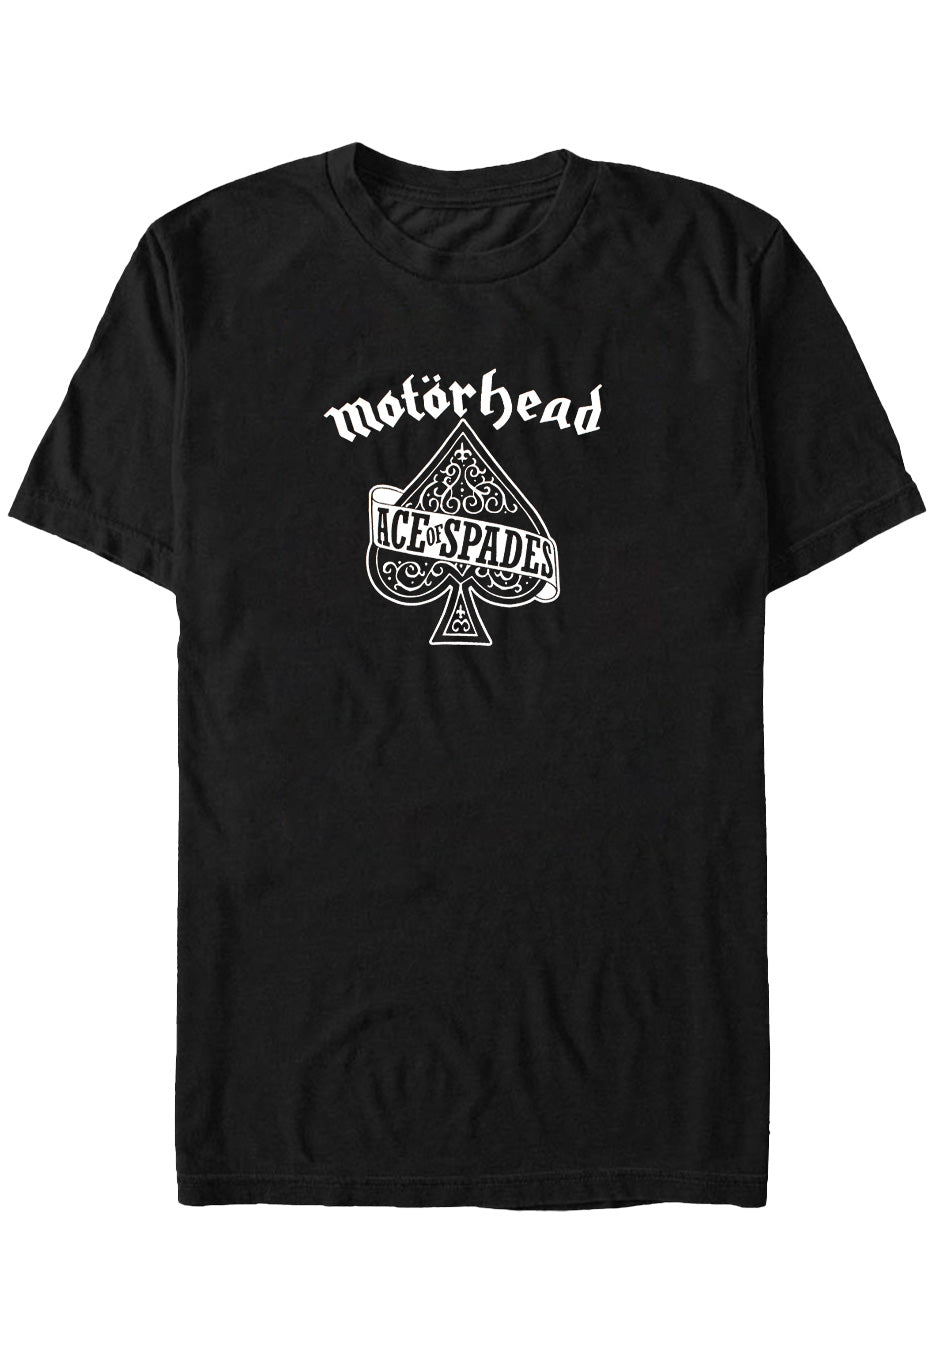 Motörhead - Ace Of Spades Active Sportswear - T-Shirt